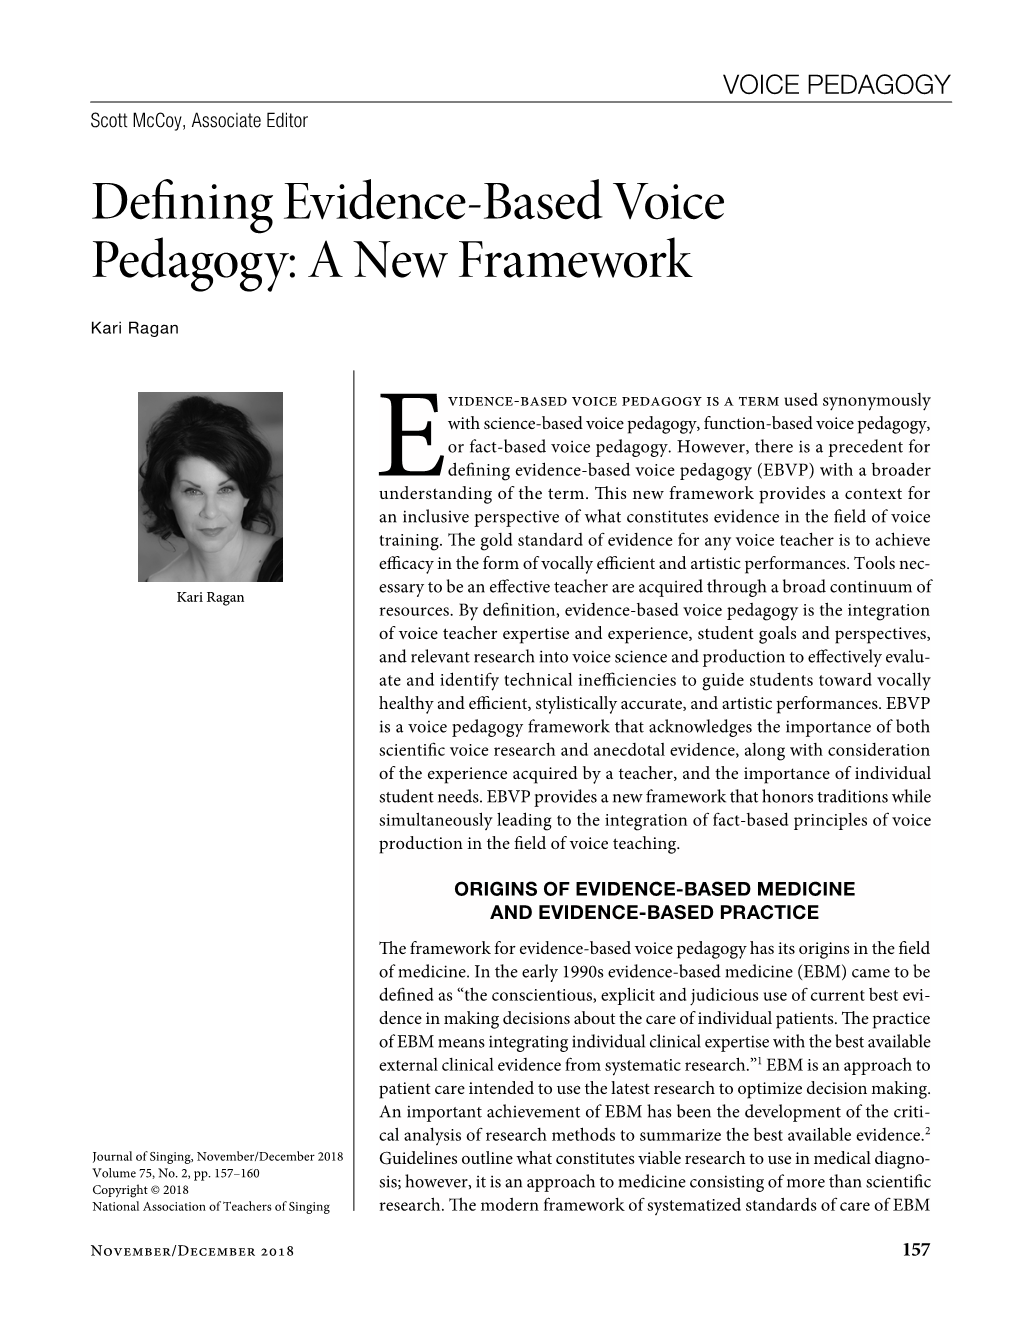 Defining Evidence-Based Voice Pedagogy: a New Framework